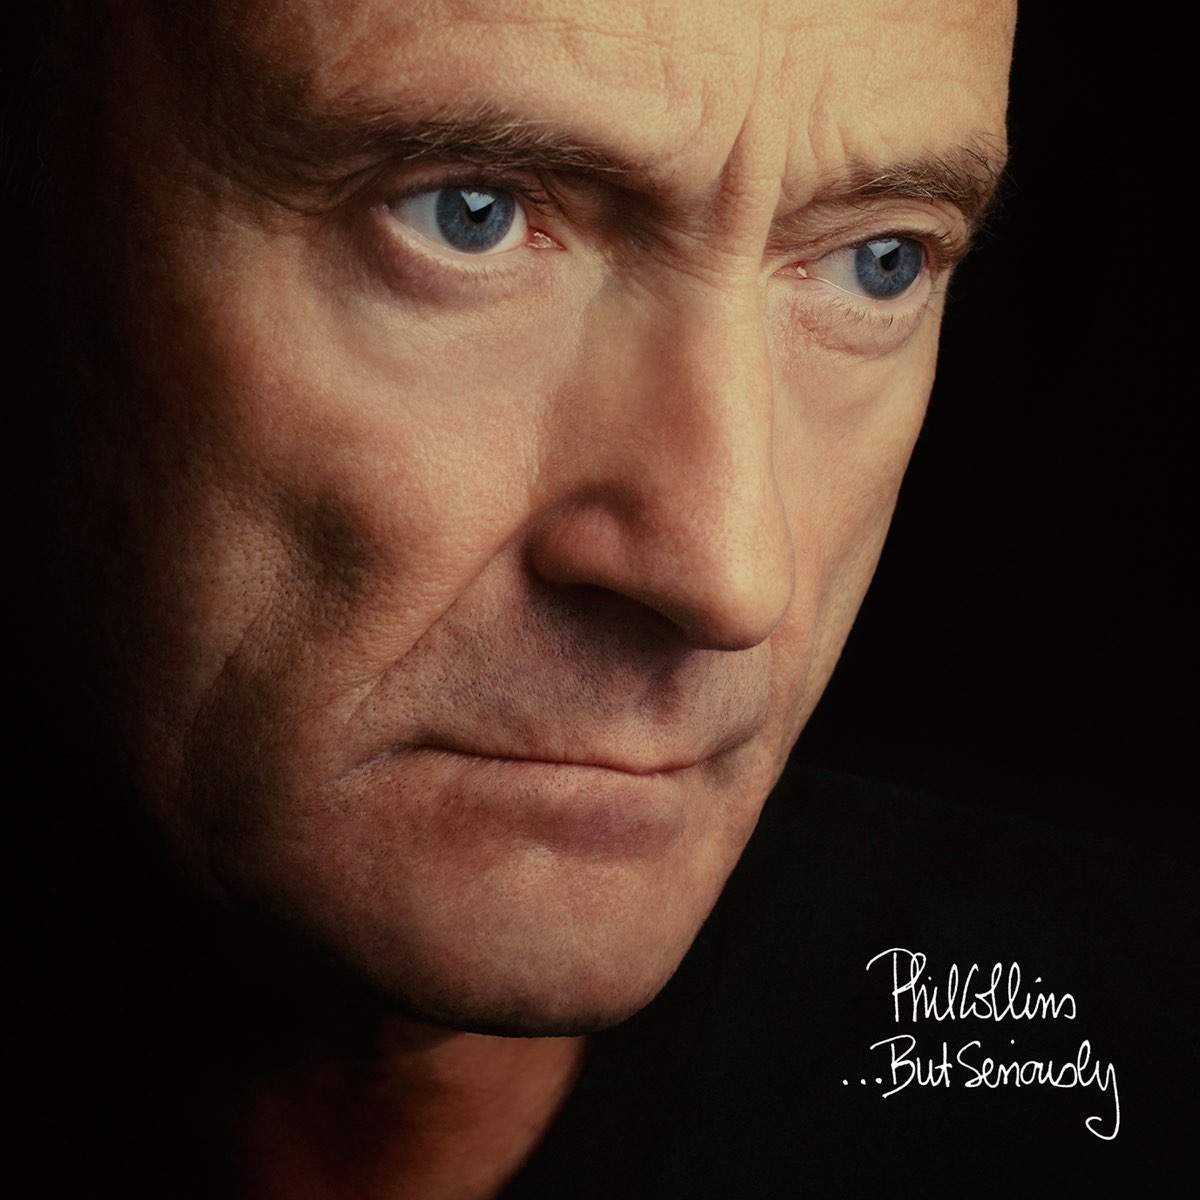 Phil Collins - All Of My Life (TRADUÇÃO) - Ouvir Música